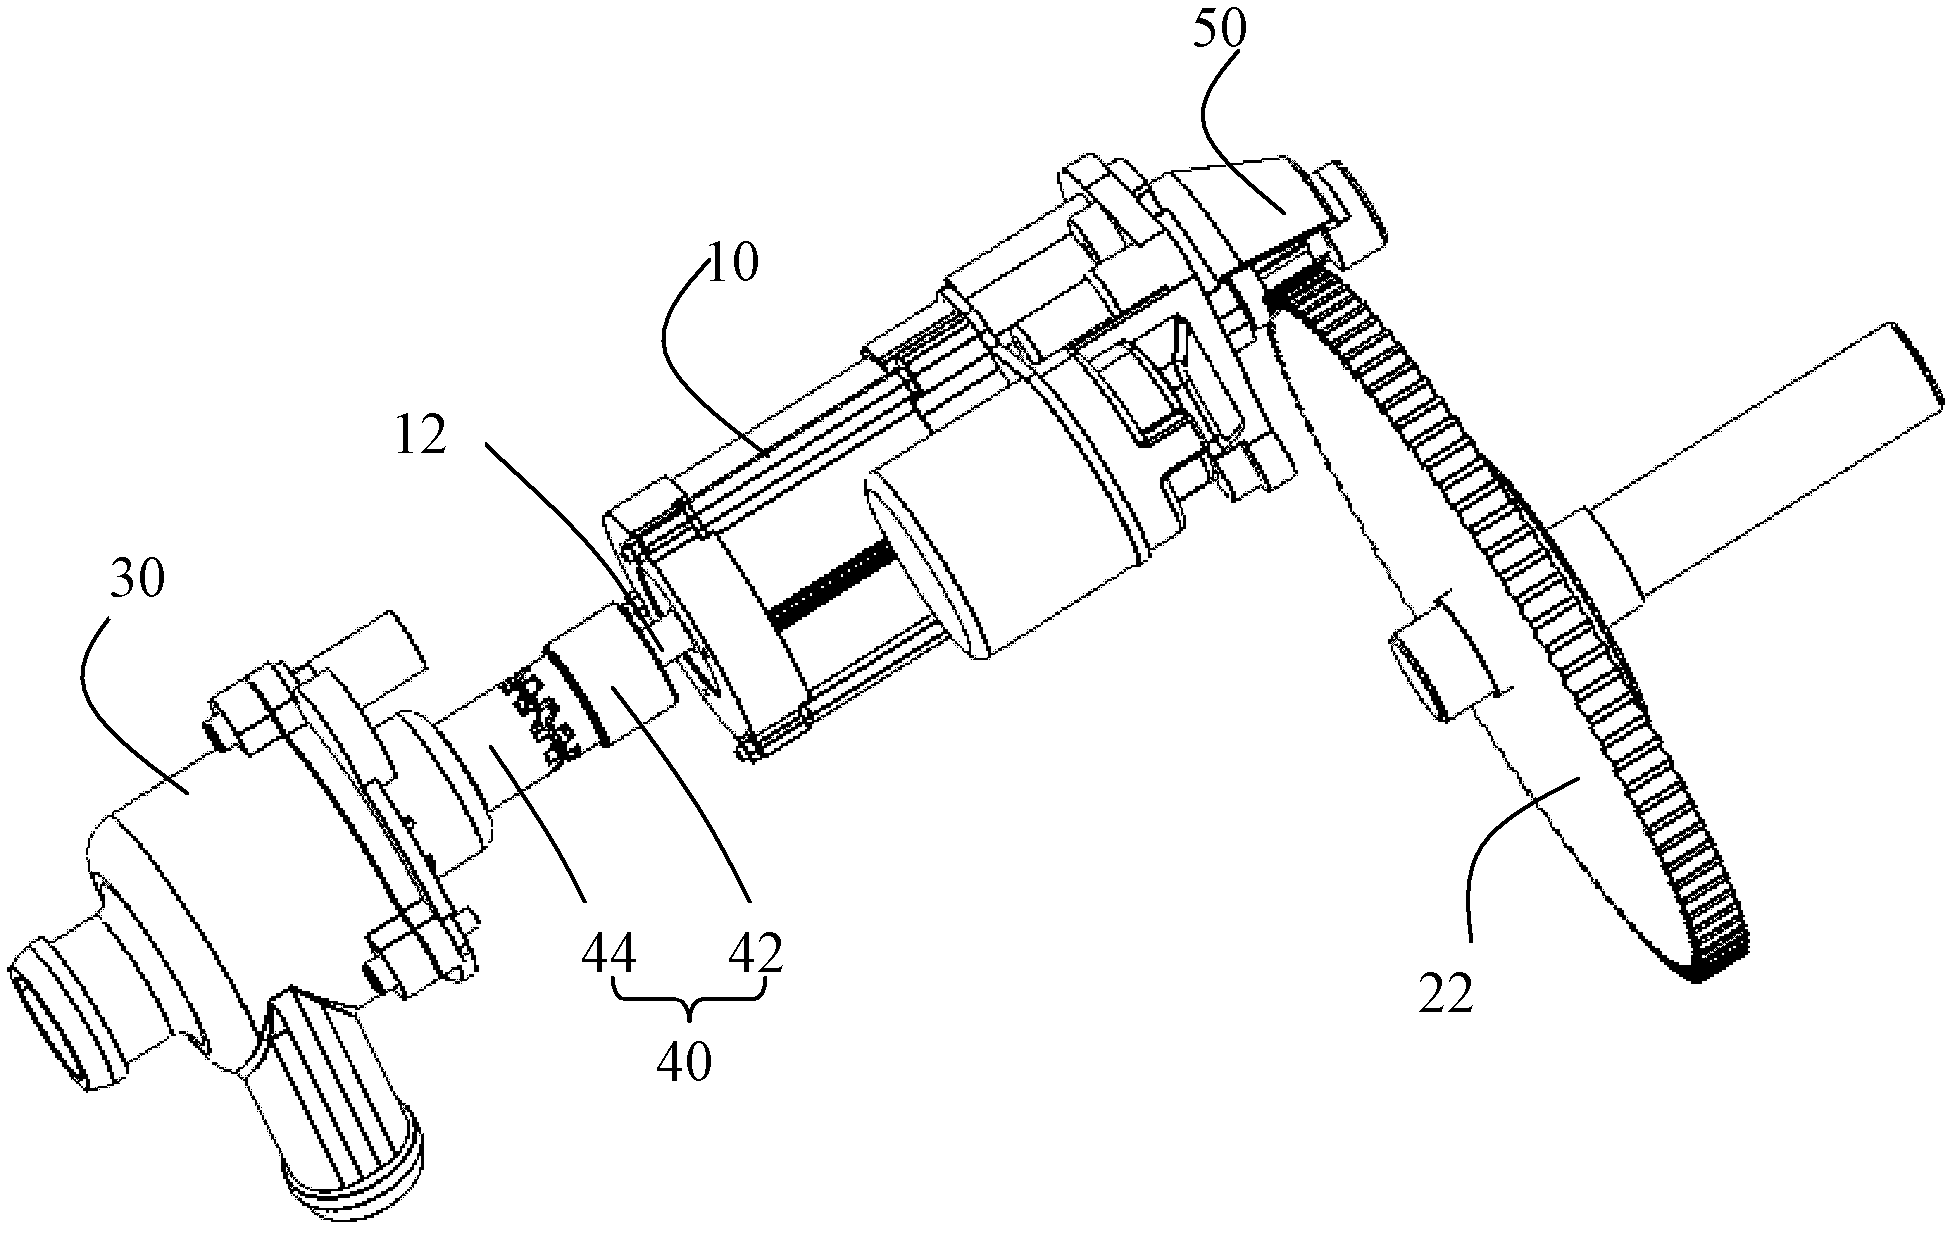 Vehicle engine starting system